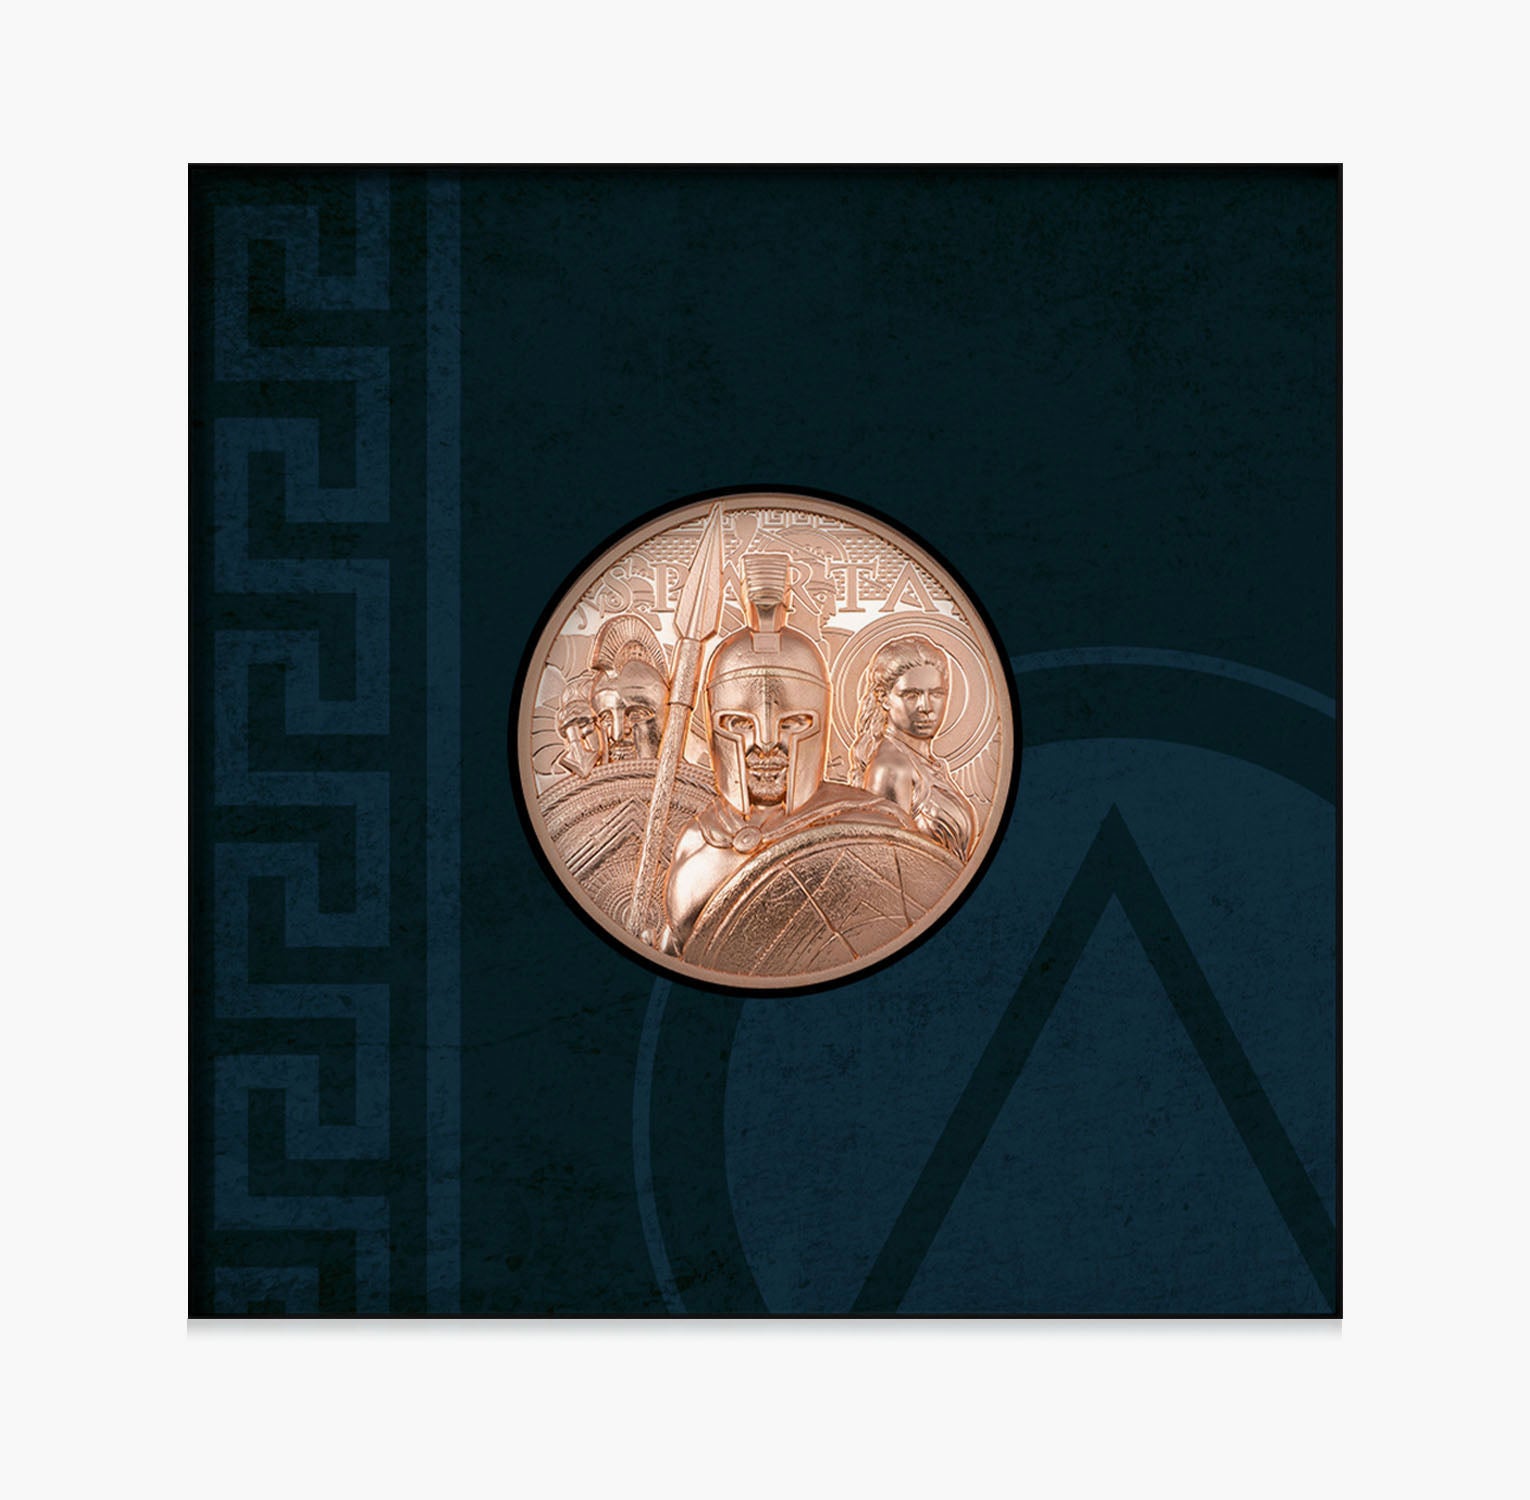 Sparta 2023 超高浮き彫りソリッド銅コイン